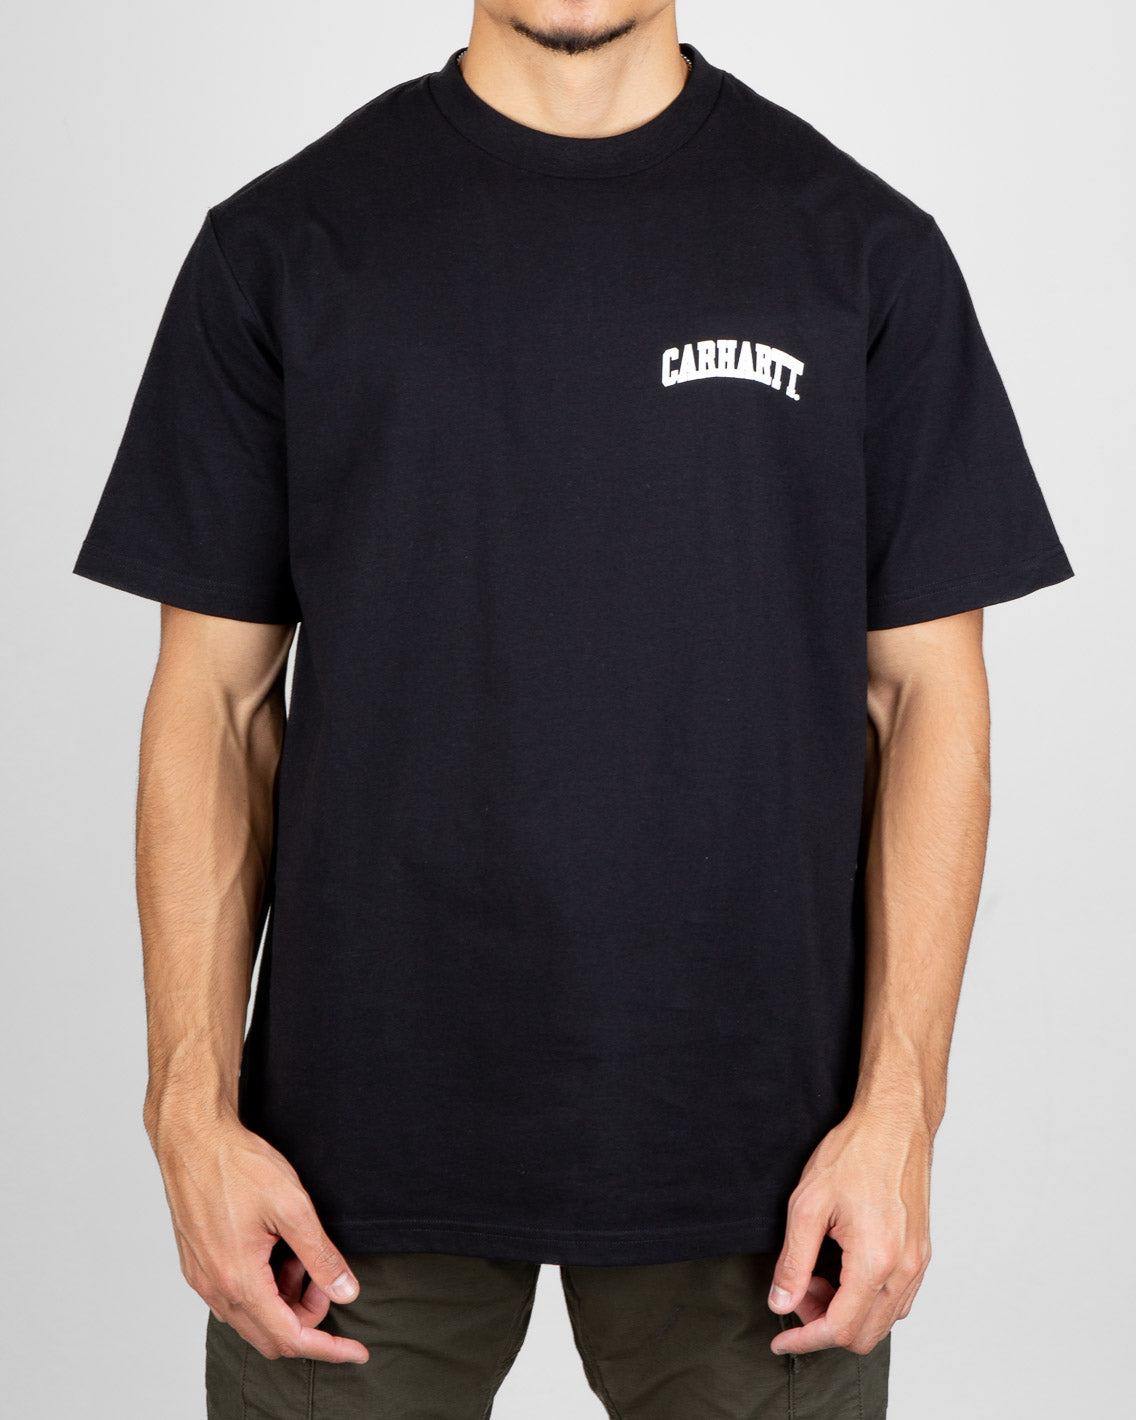 Carhartt - University Script T-Shirt - Black / White